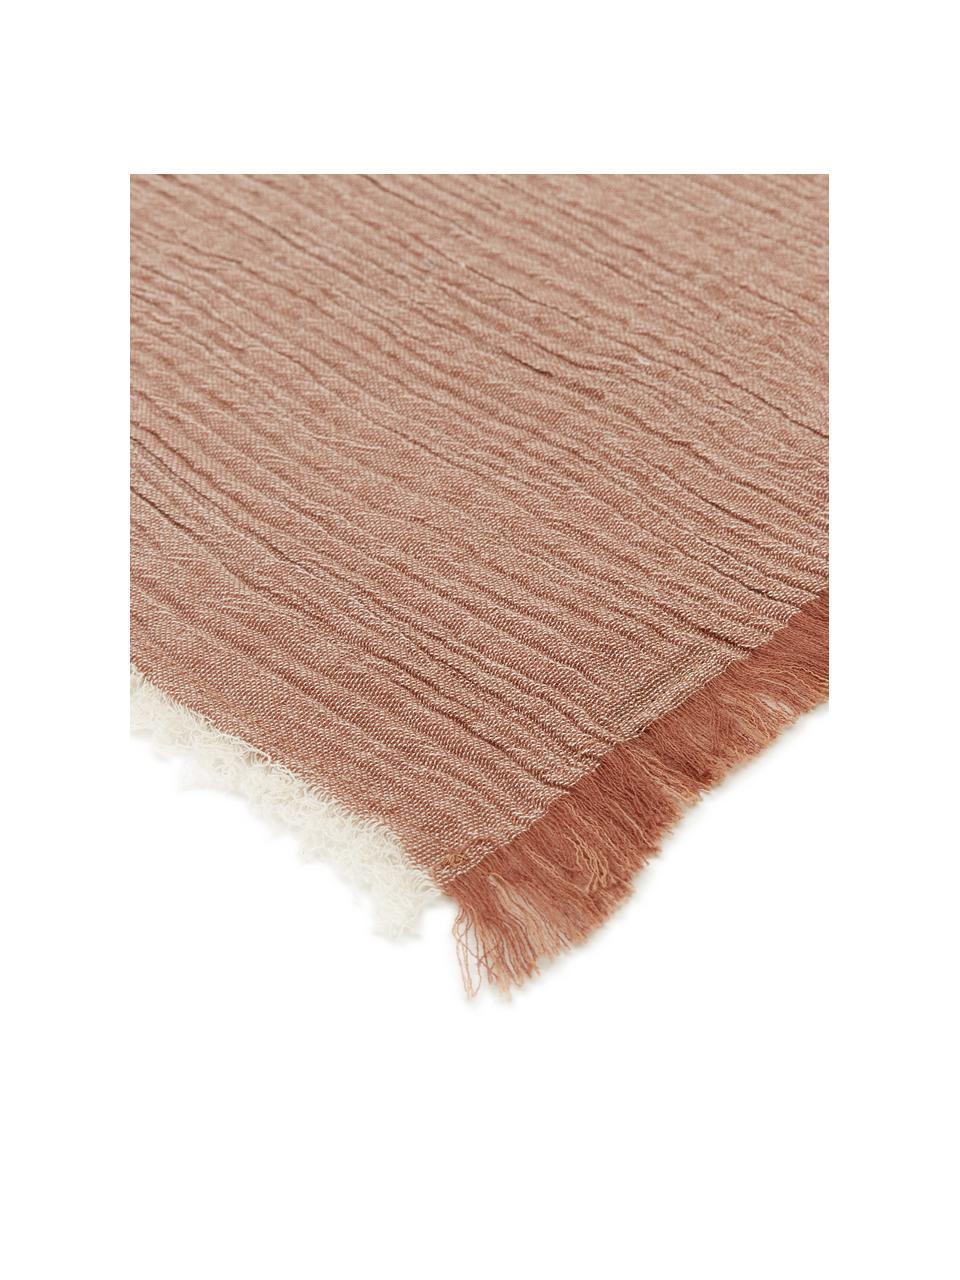 Serwetka z terakoty Layer, 4 szt., 100% bawełna, Terakota, S 45 x D 45 cm